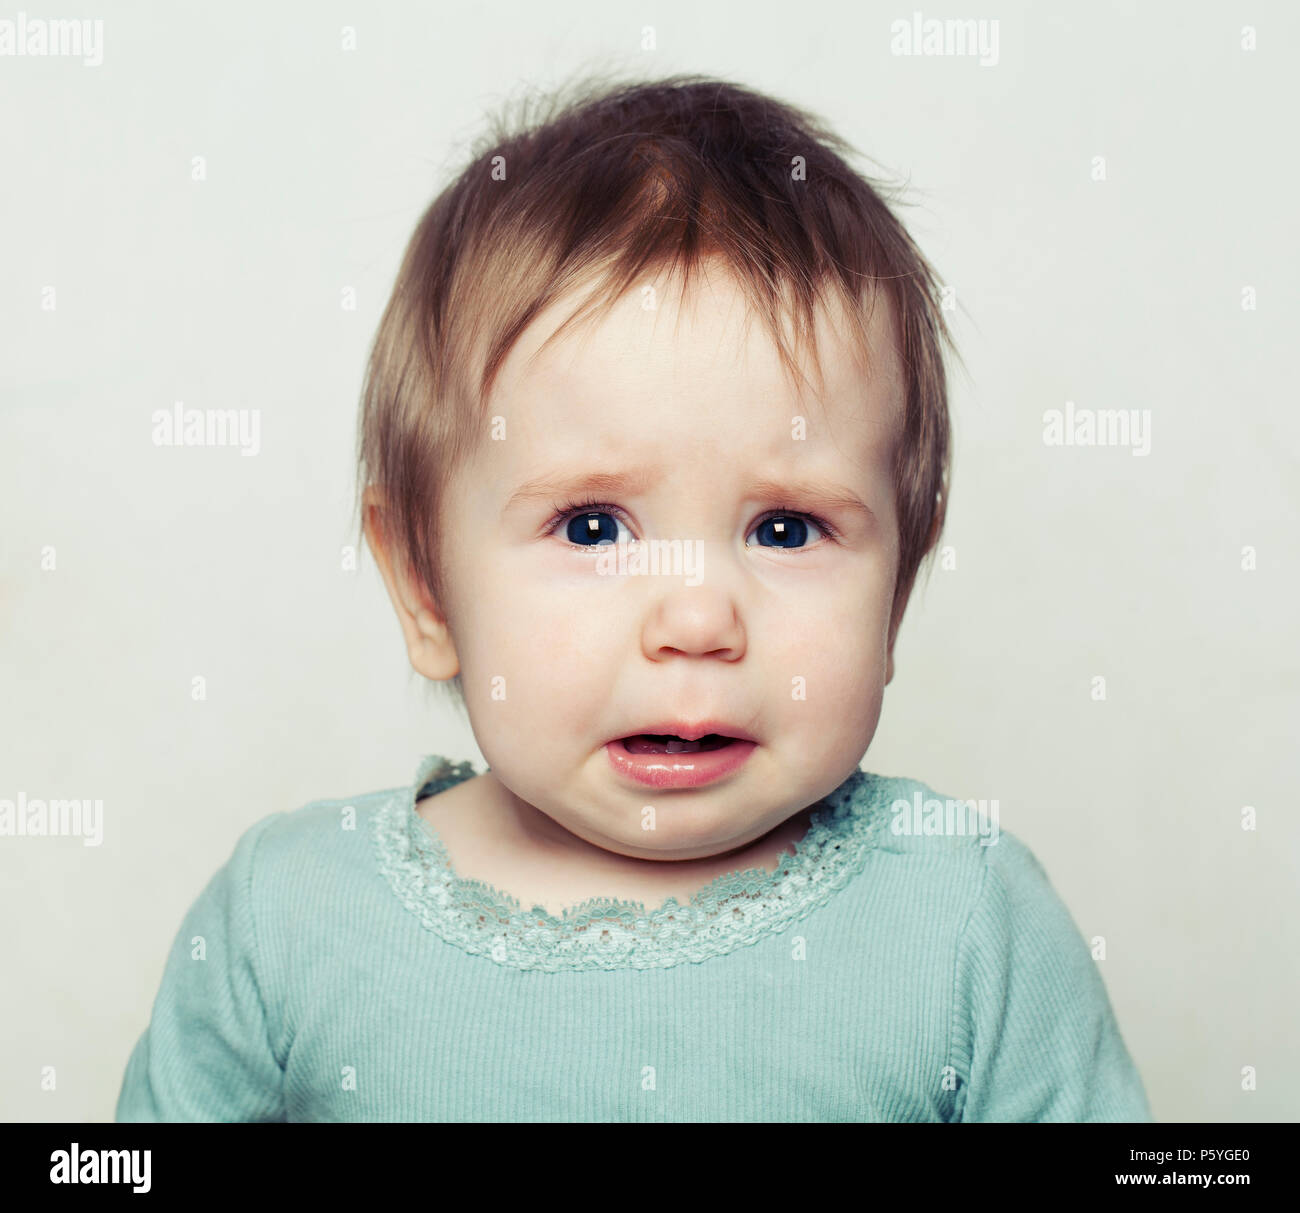 Small Baby Girl Crying. Sad Child Stock Photo